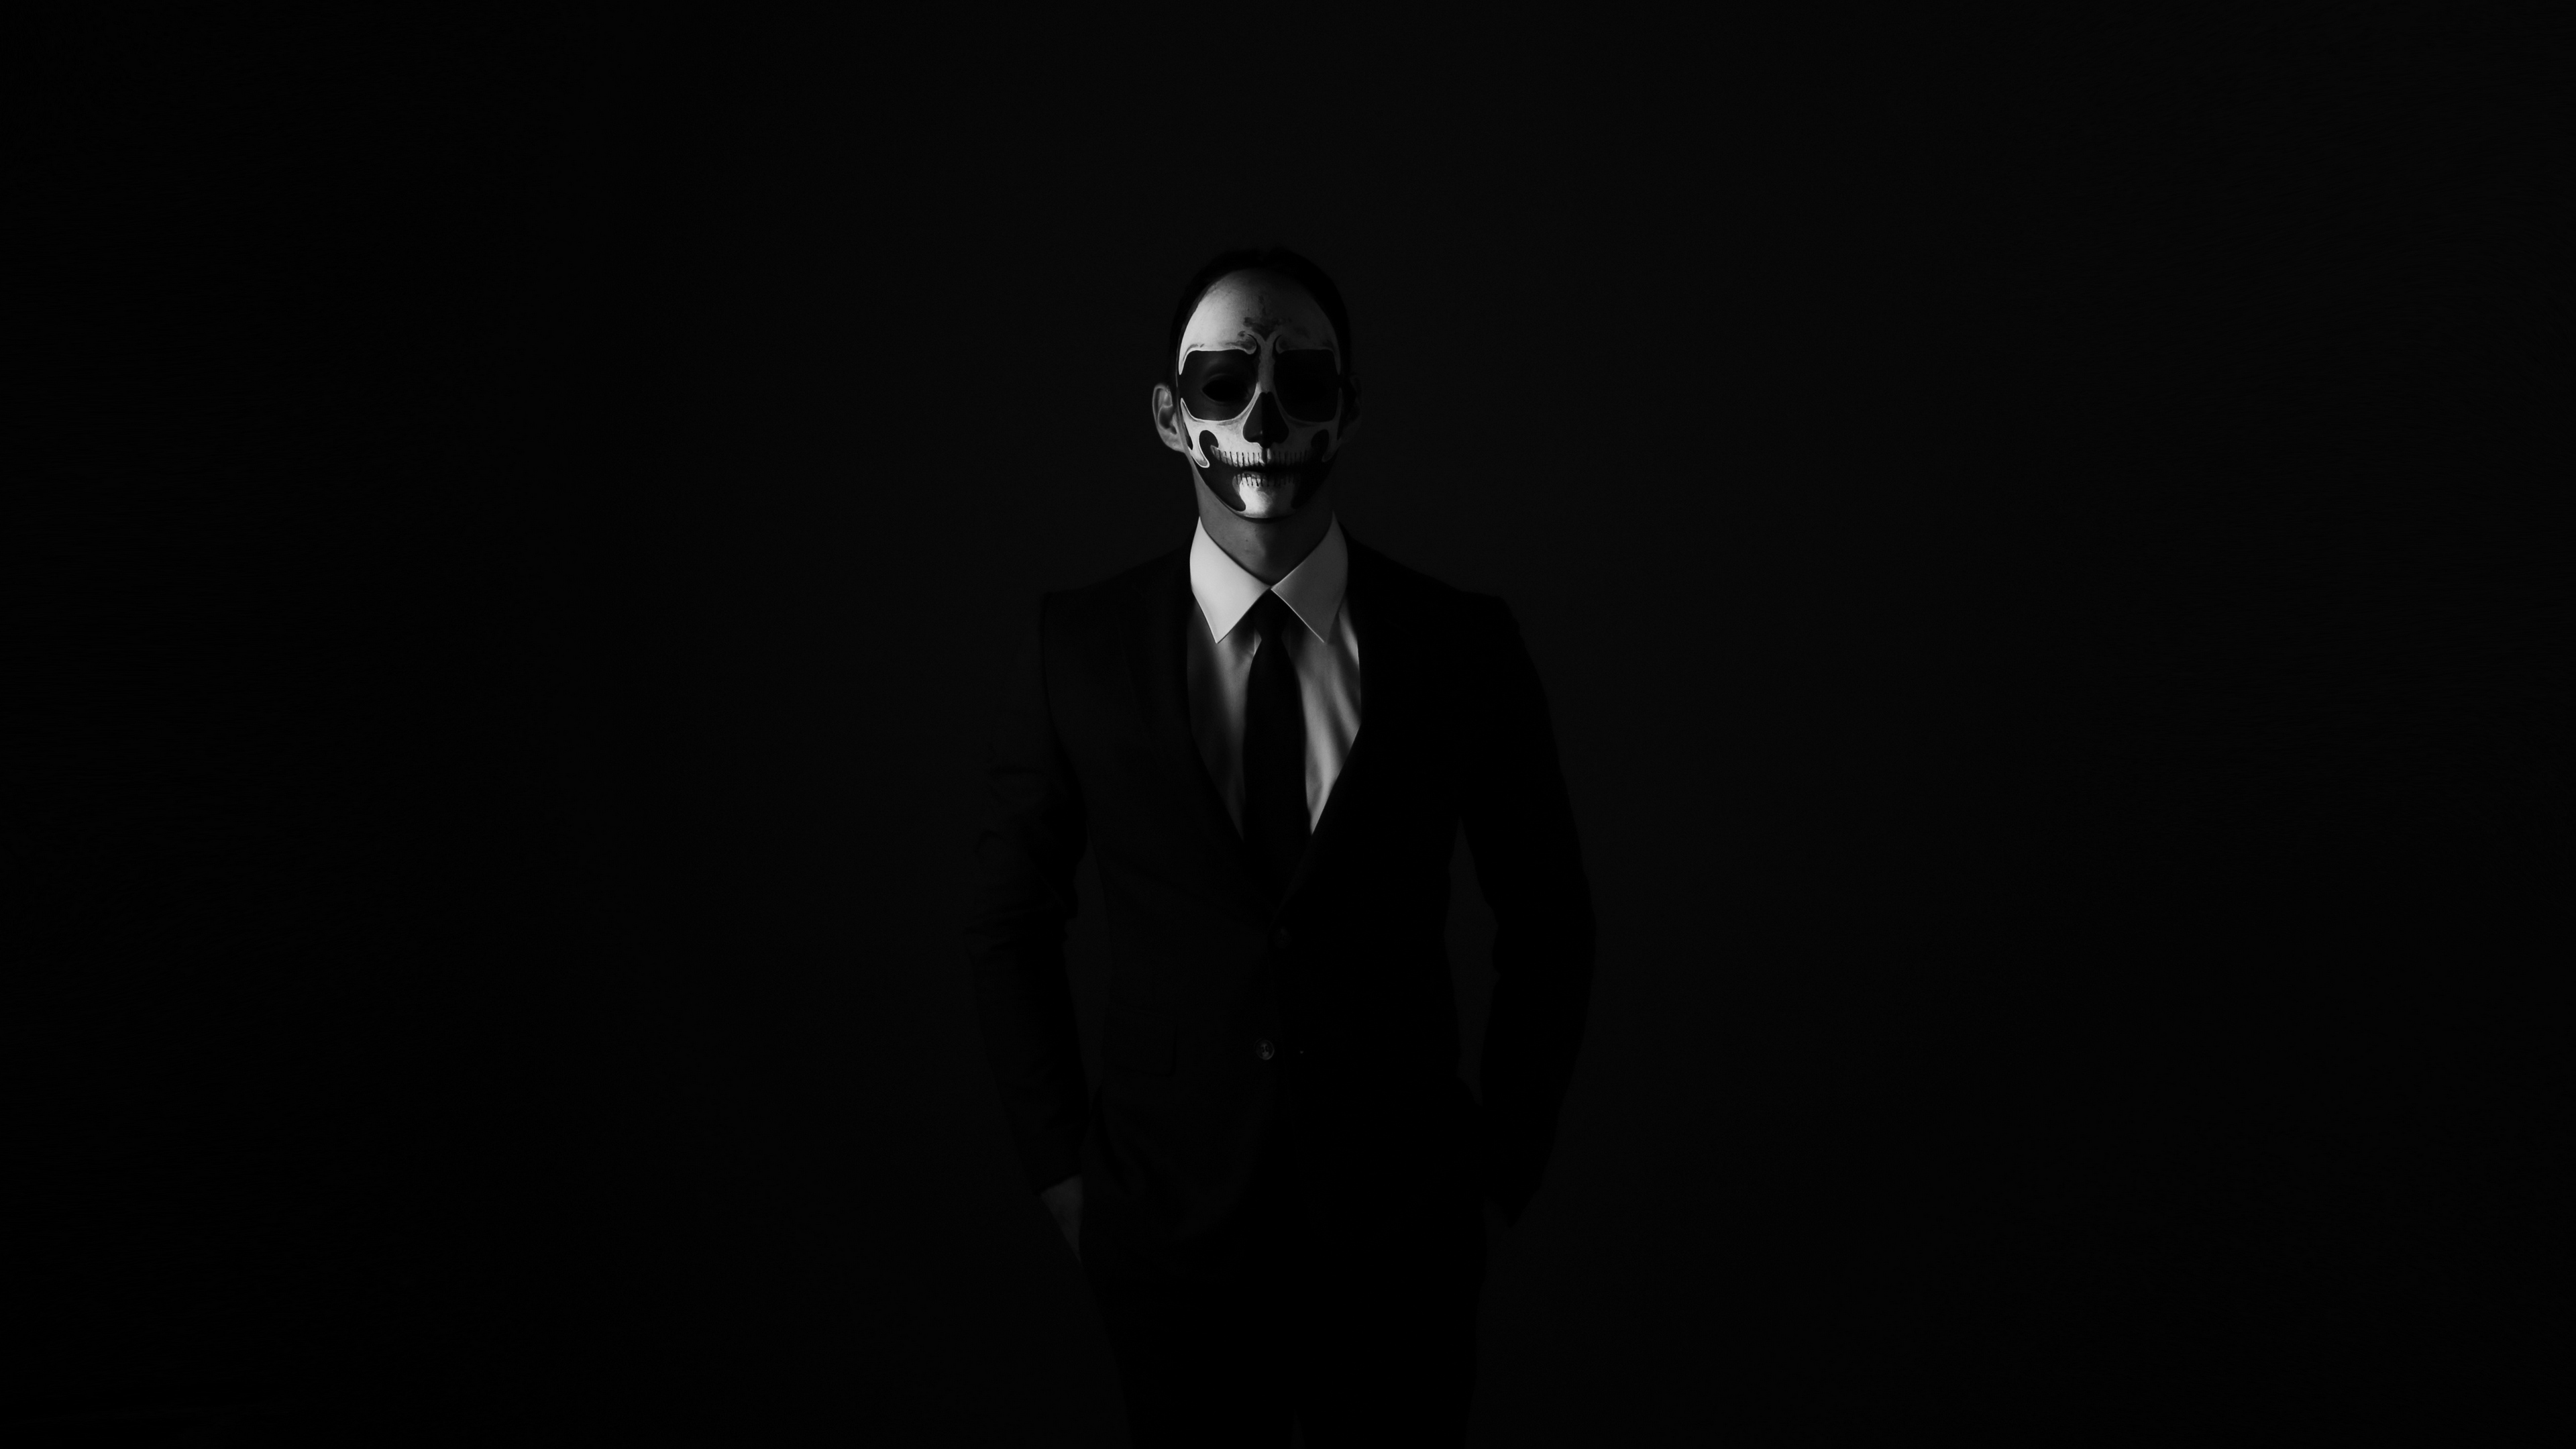 mask anonymous bw tie suit jacket shirt dark 4k 1540576151 - mask, anonymous, bw, tie, suit jacket, shirt, dark 4k - Mask, bw, Anonymous